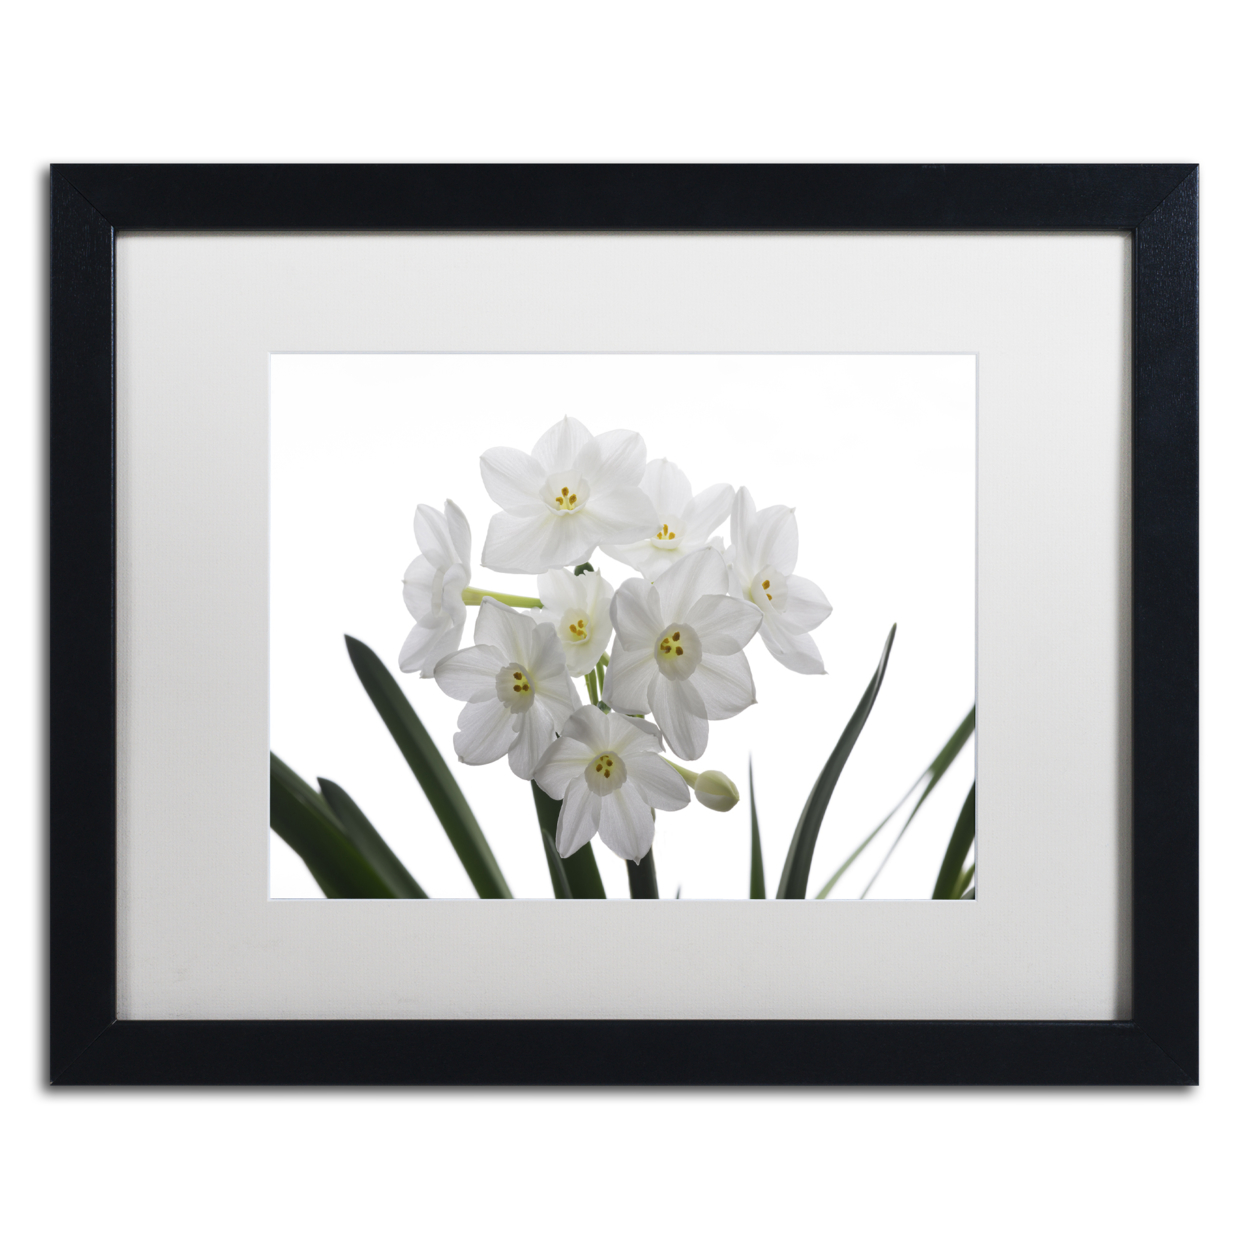 Kurt Shaffer 'Paper White Bouquet' Black Wooden Framed Art 18 X 22 Inches